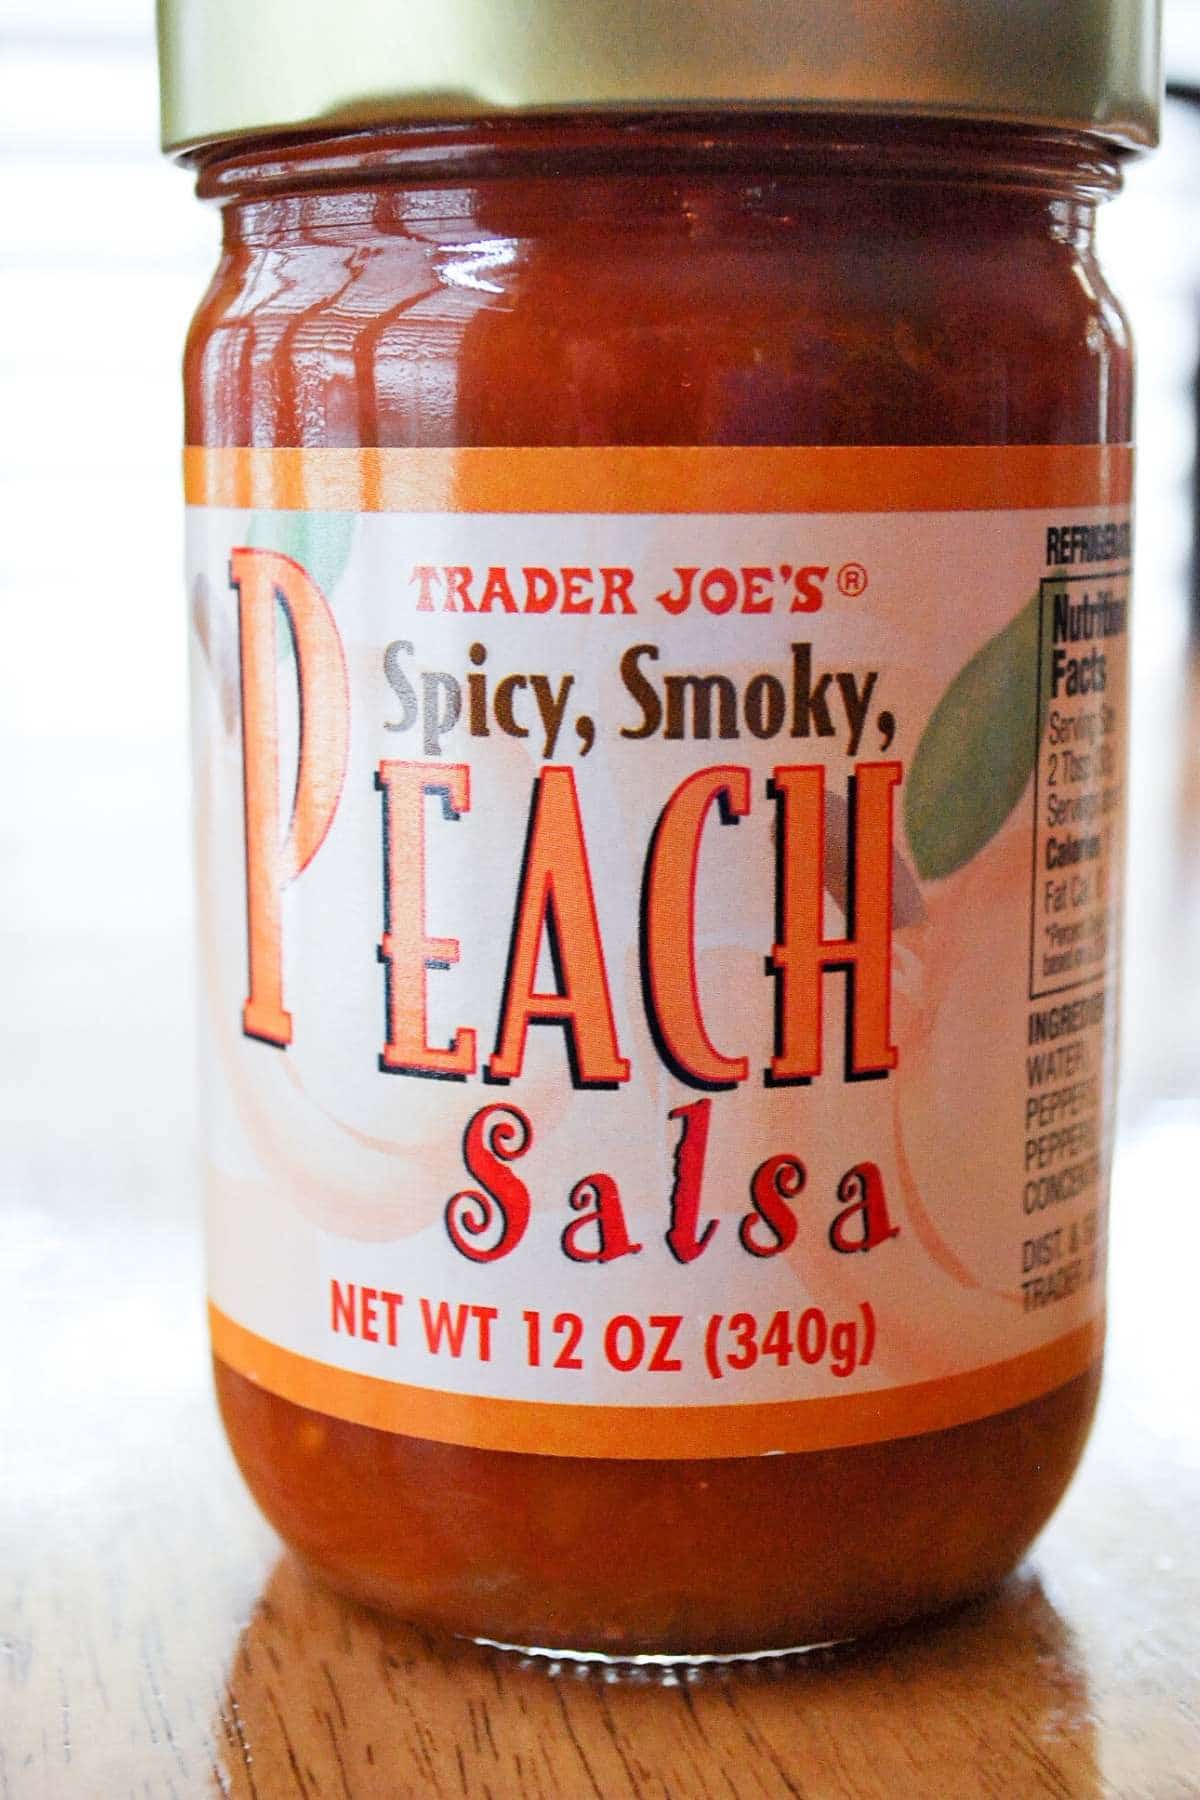 Trader Joe's peach salsa jar